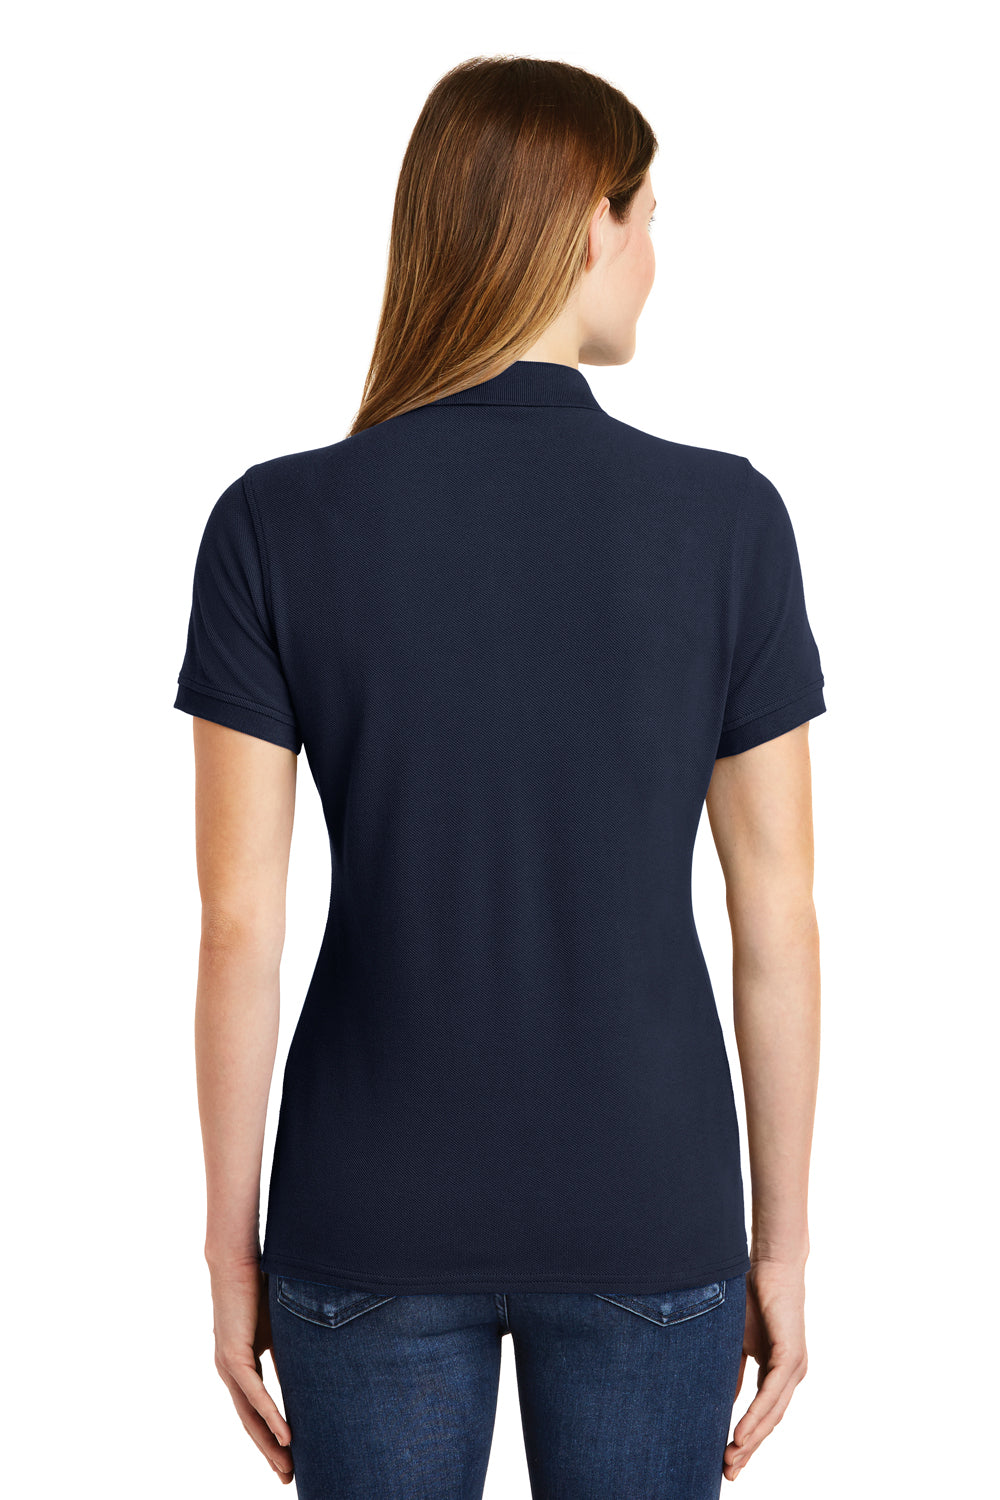 Port & Company LKP1500 Womens Stain Resistant Short Sleeve Polo Shirt Navy Blue Back